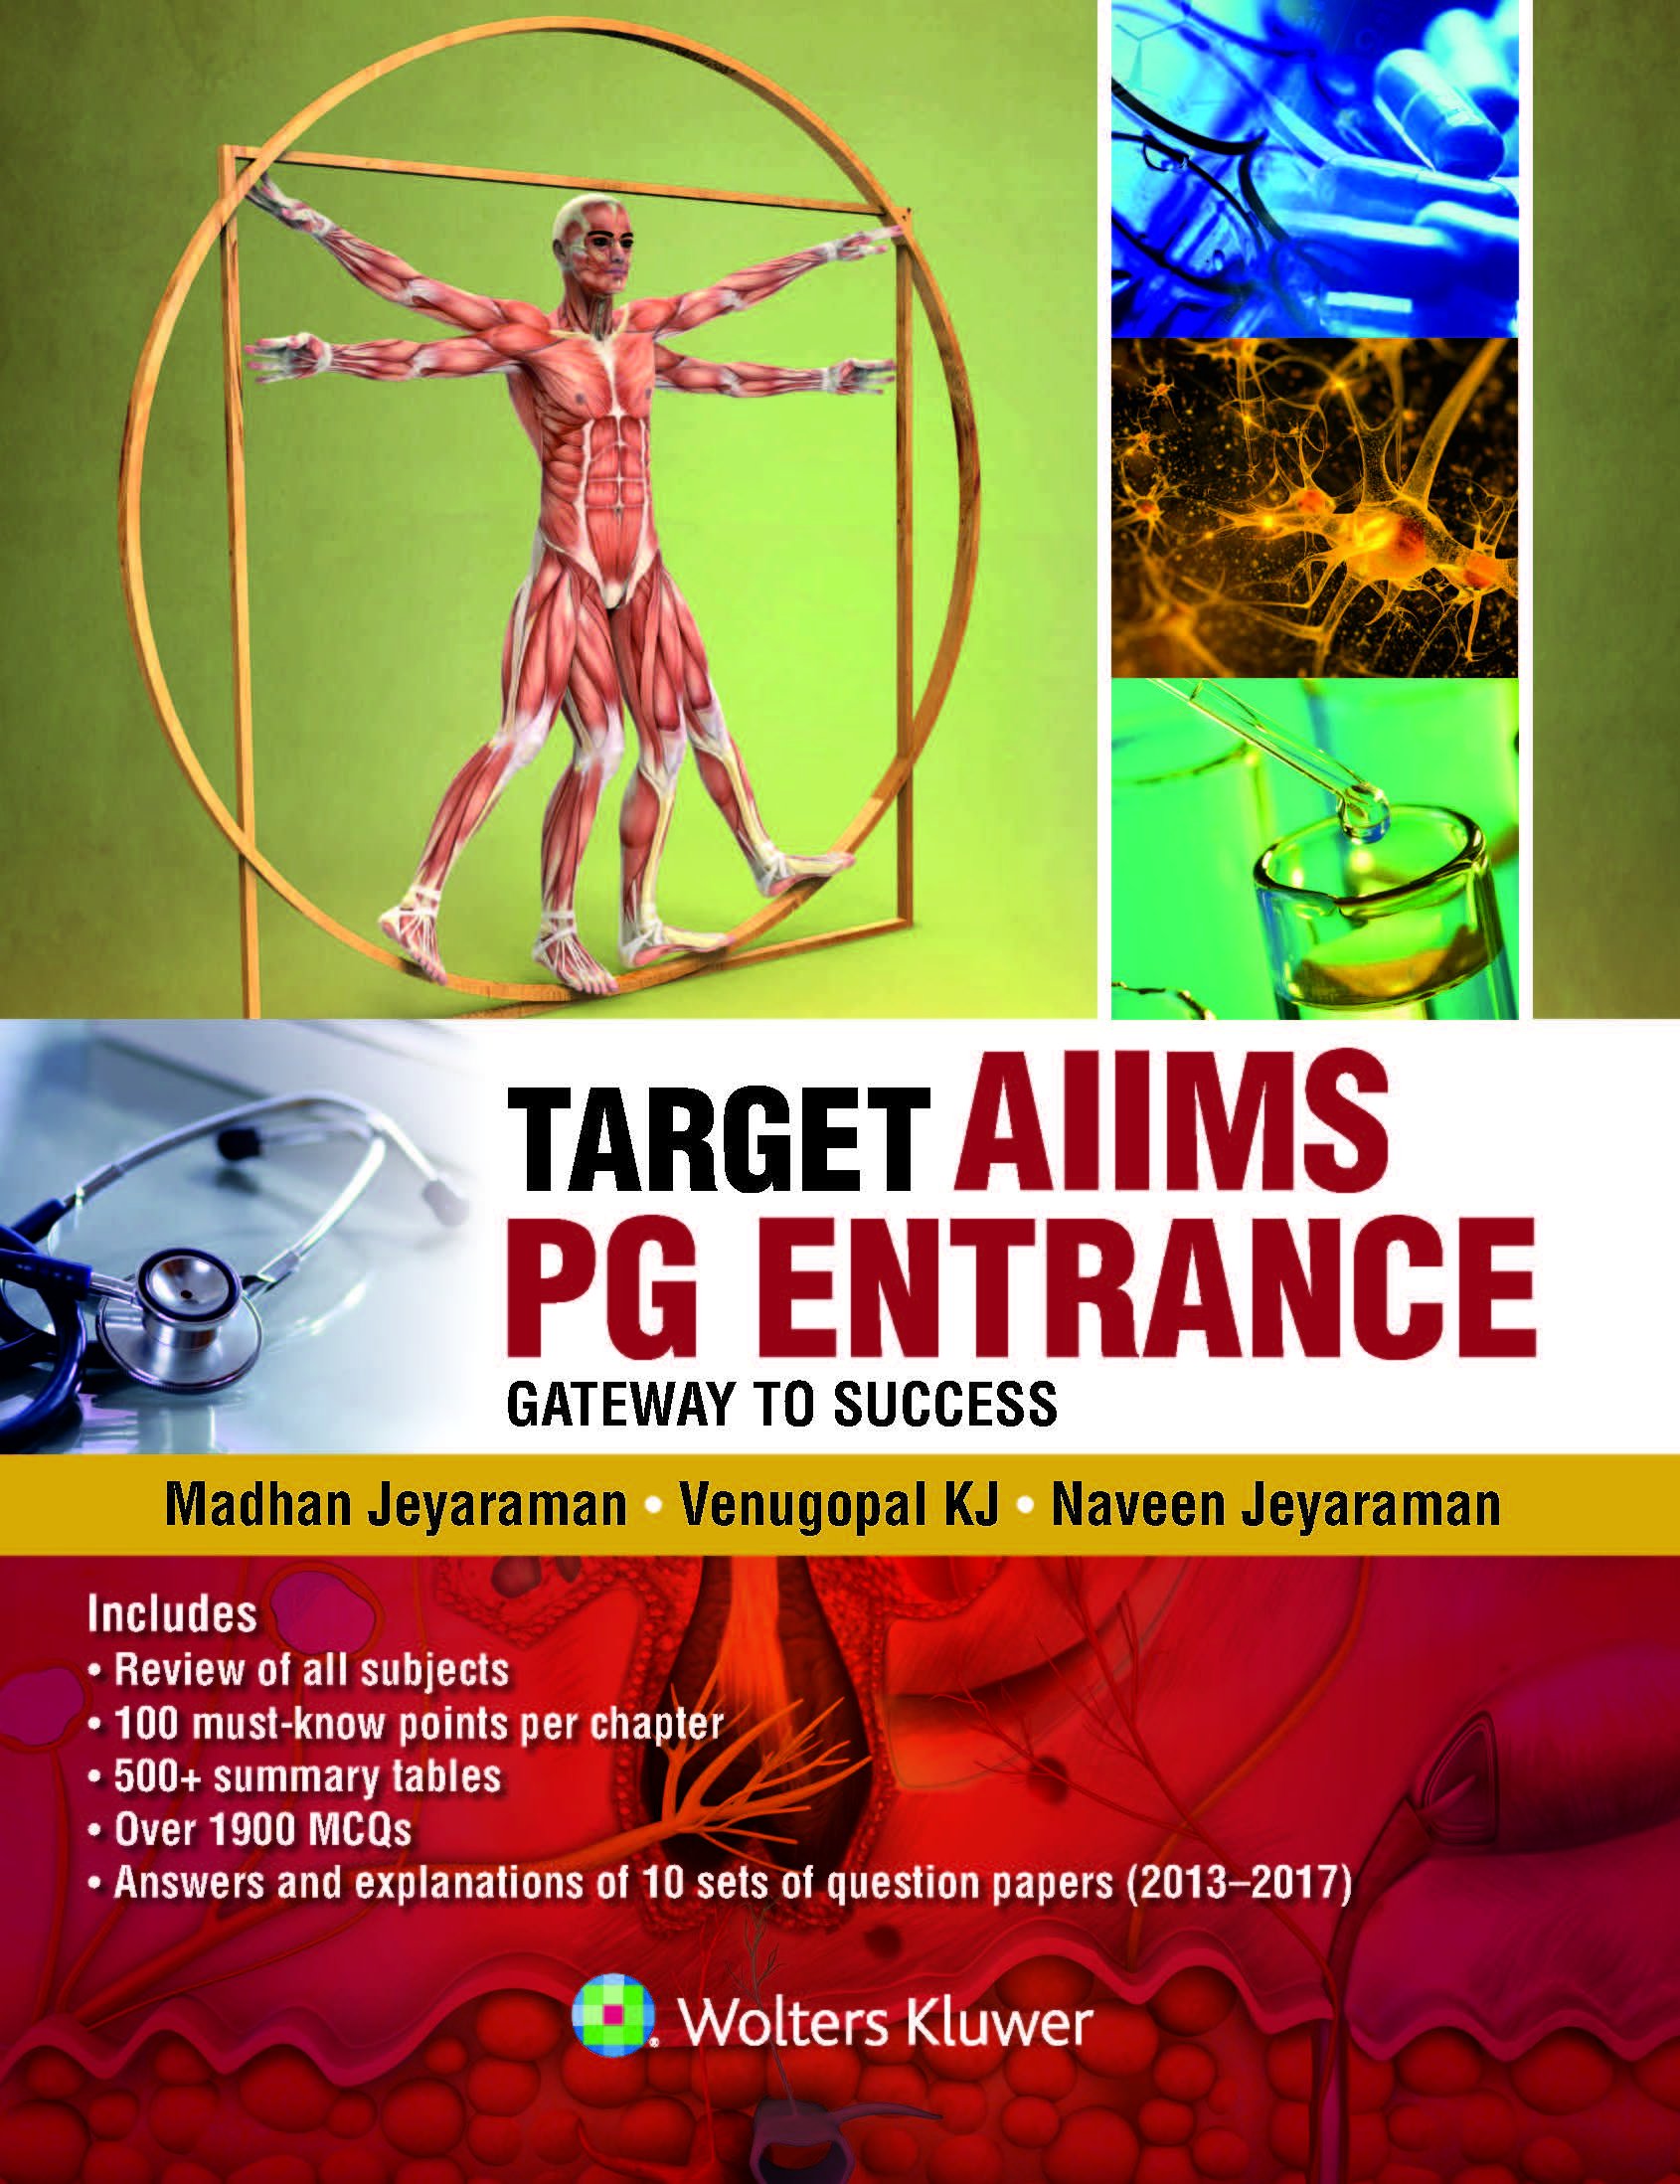 Target AIIMS PG Entrance Gateway to Success